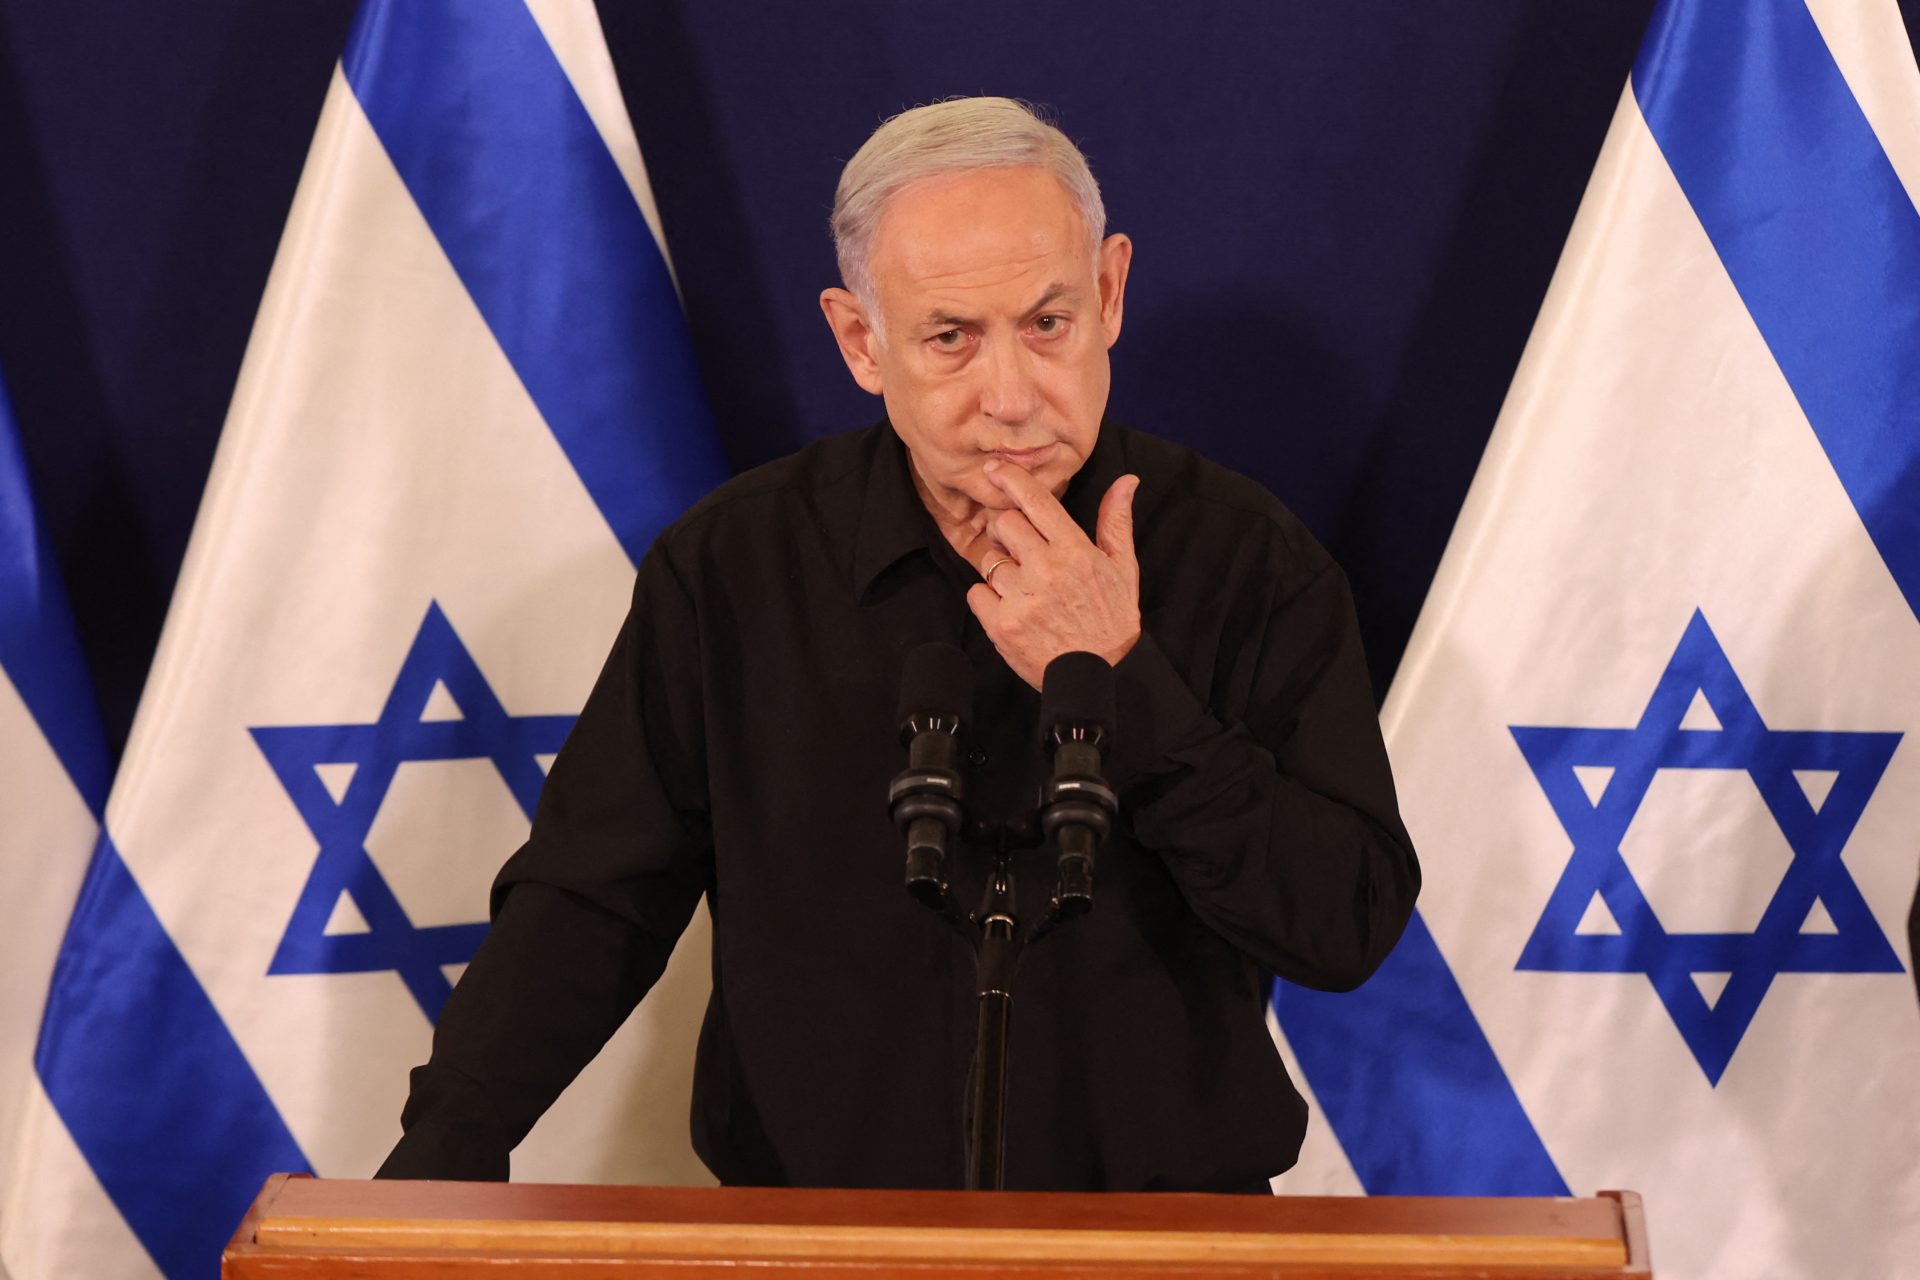 Netanyahu craint une arrestation internationale selon Maariv